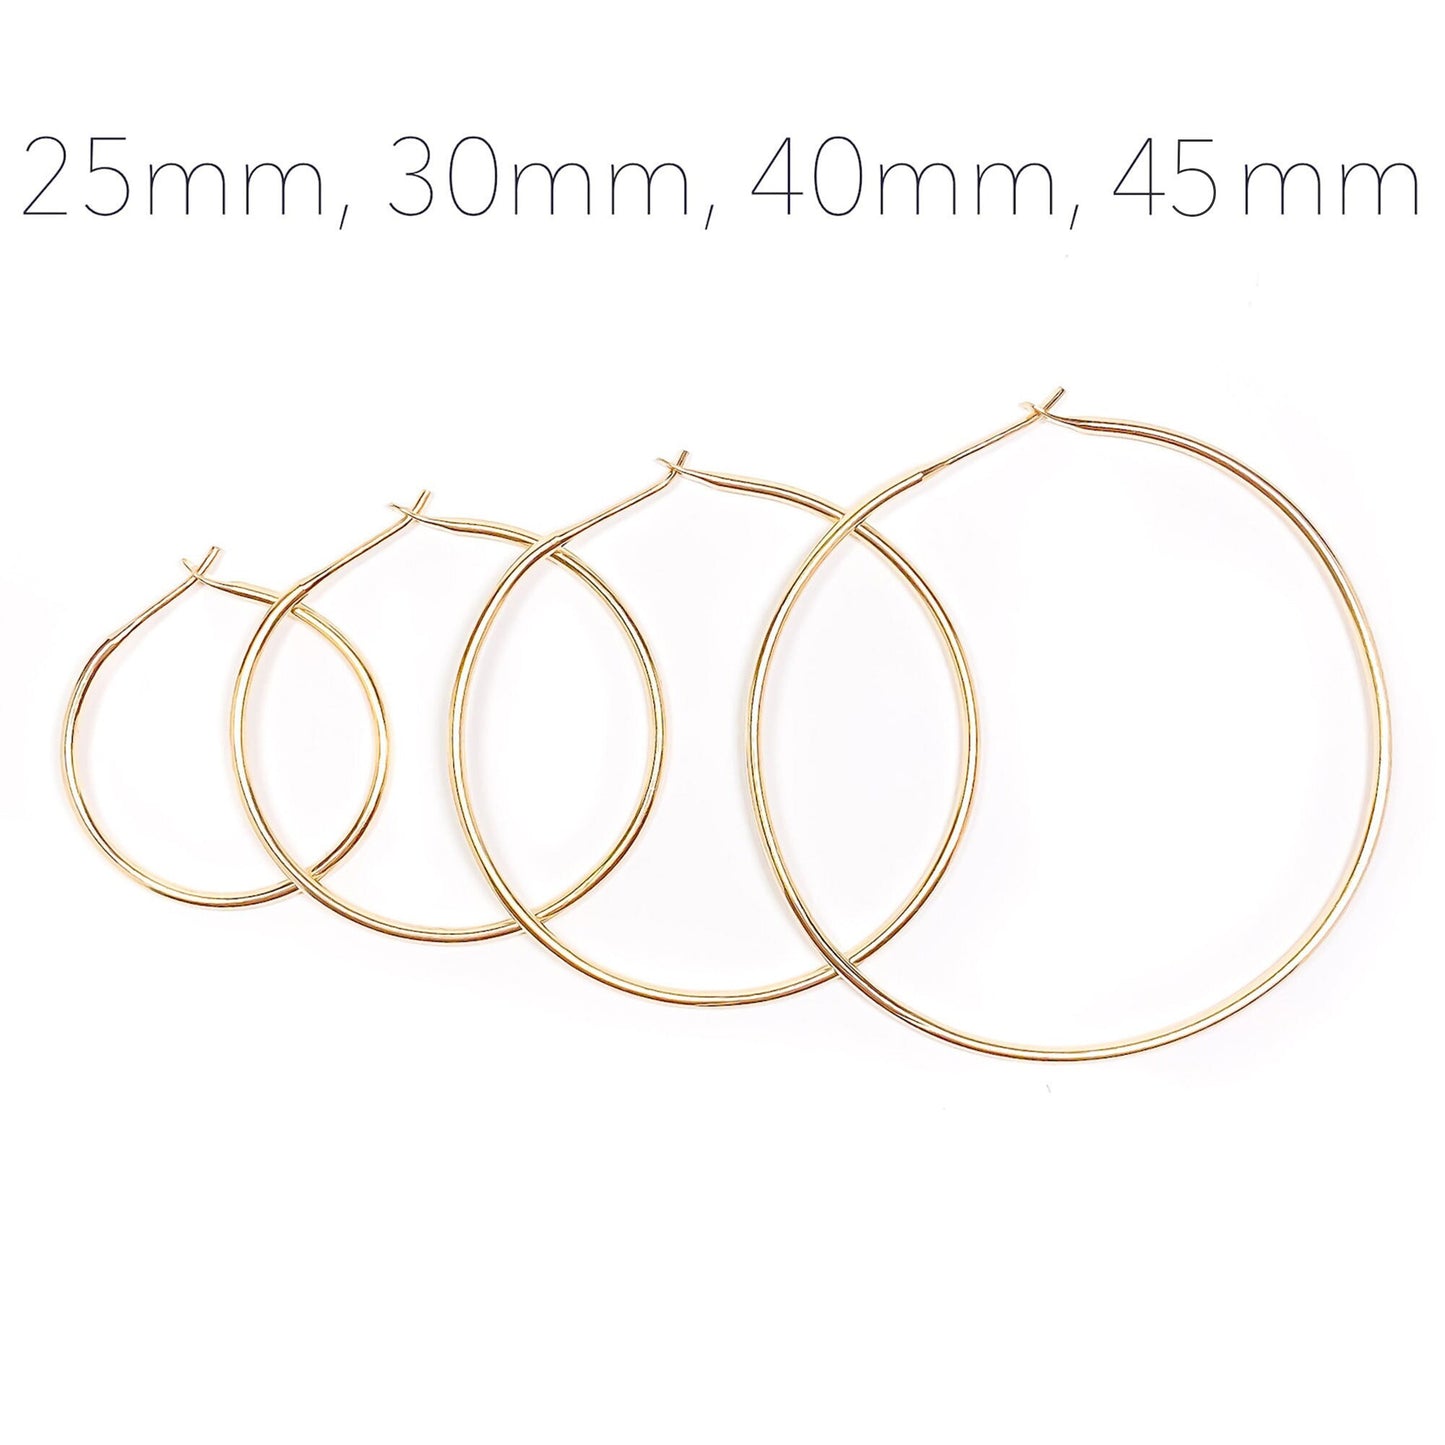 30mm Hoop Earrings, 14K Gold Filled